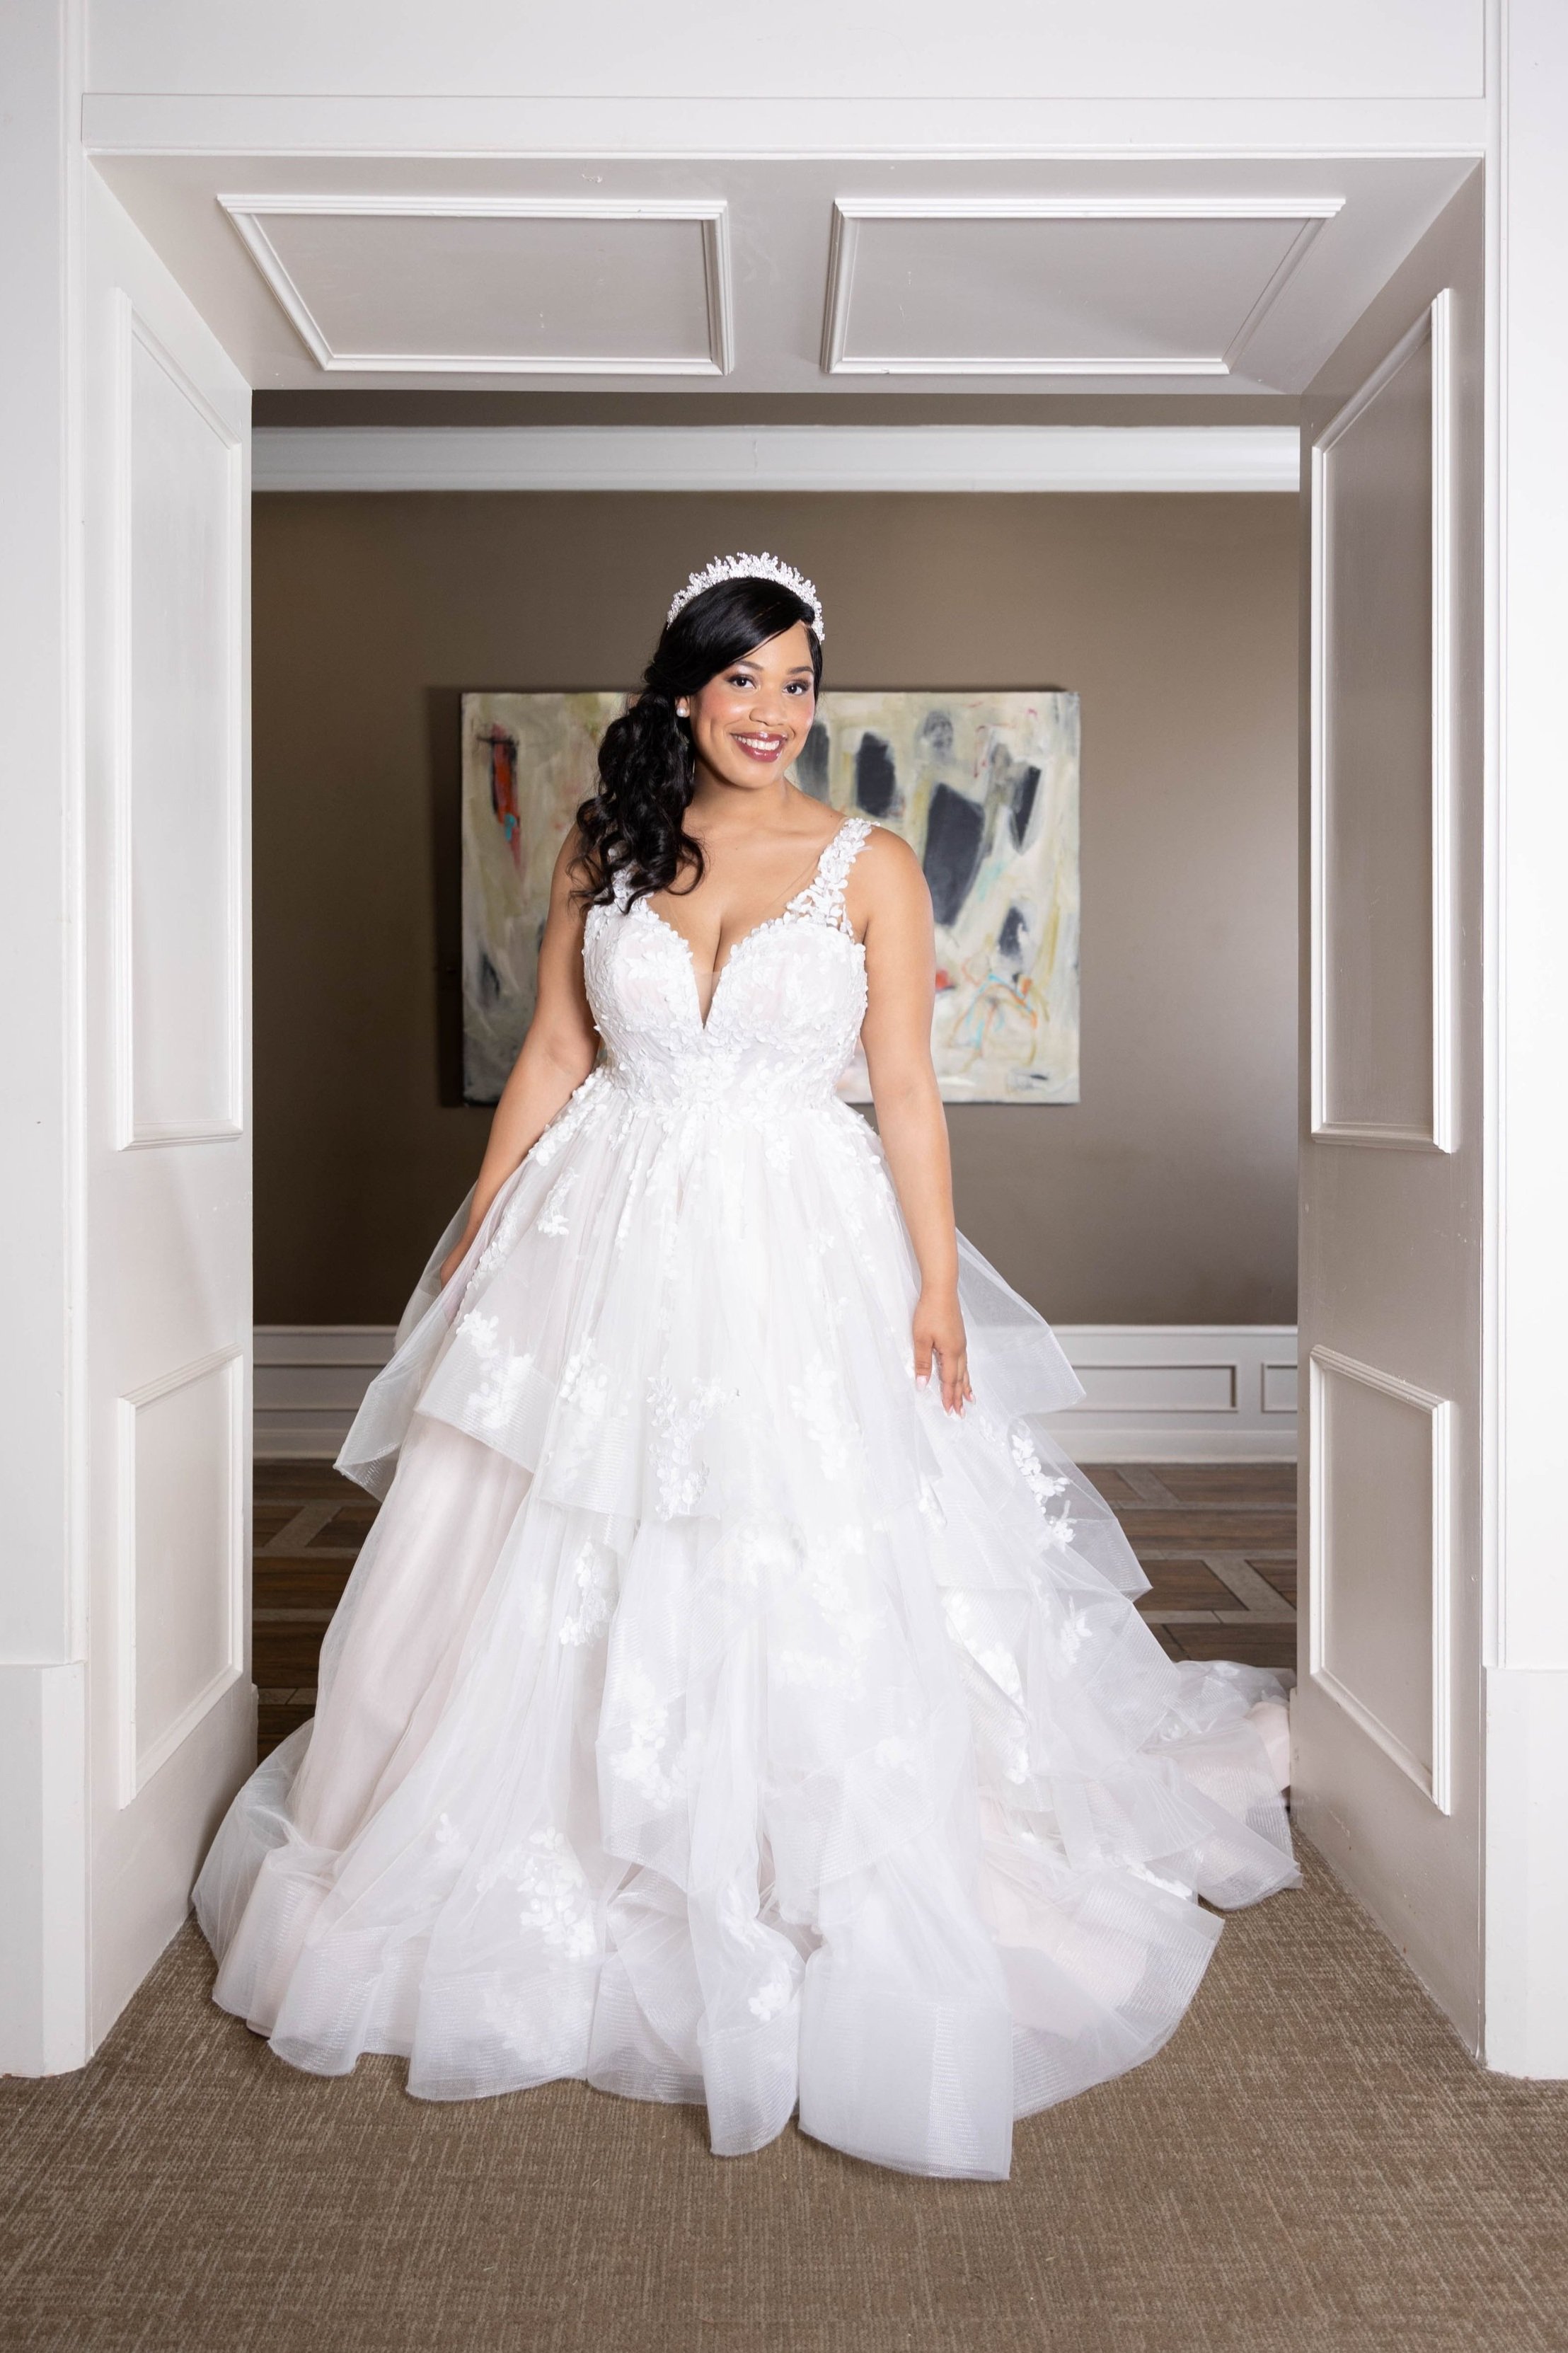 Town & Country Bridal - Dress & Attire - New Orleans, LA - WeddingWire